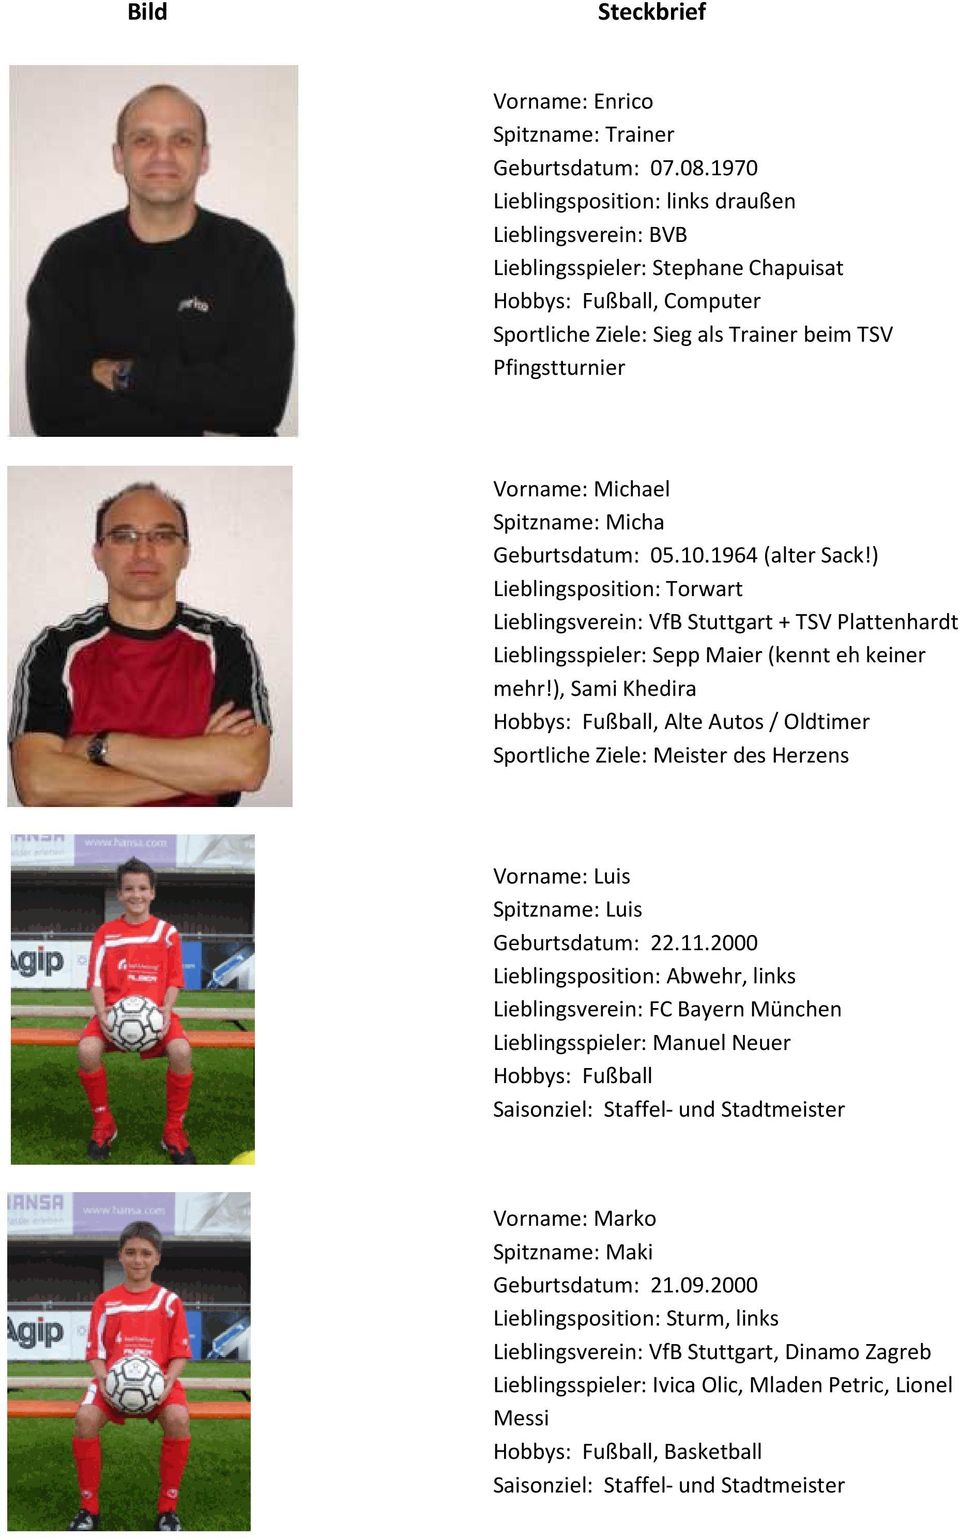 Spitzname: Micha Geburtsdatum: 05.10.1964 (alter Sack!) Lieblingsposition: Torwart + TSV Plattenhardt Lieblingsspieler: Sepp Maier (kennt eh keiner mehr!